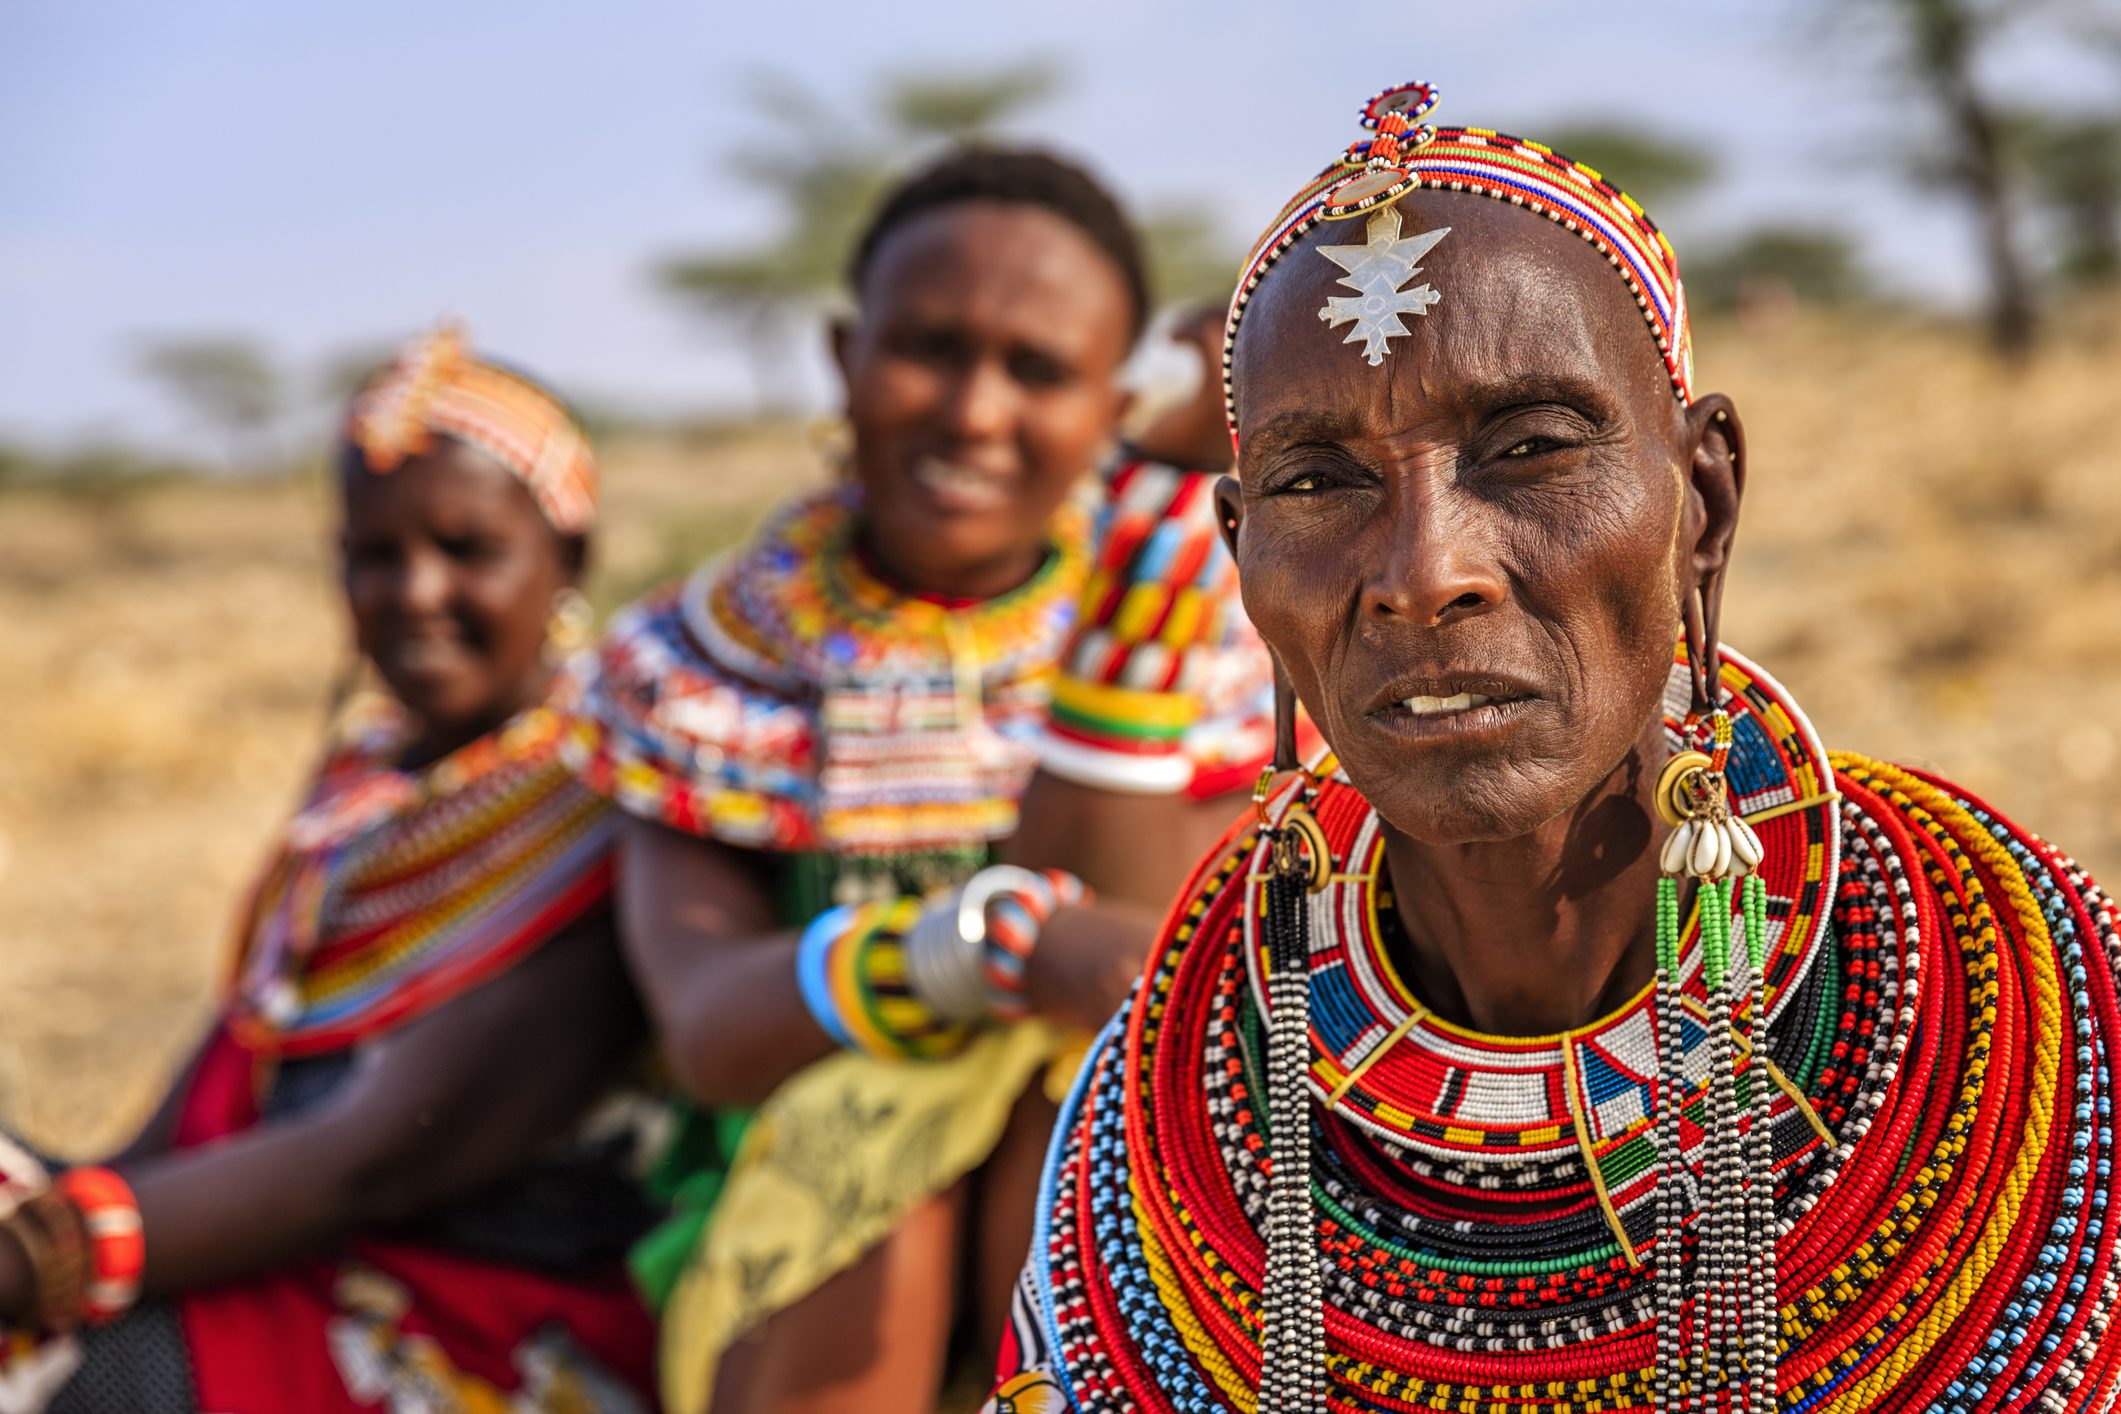 African women from Samburu tribe, Kenya, Africa